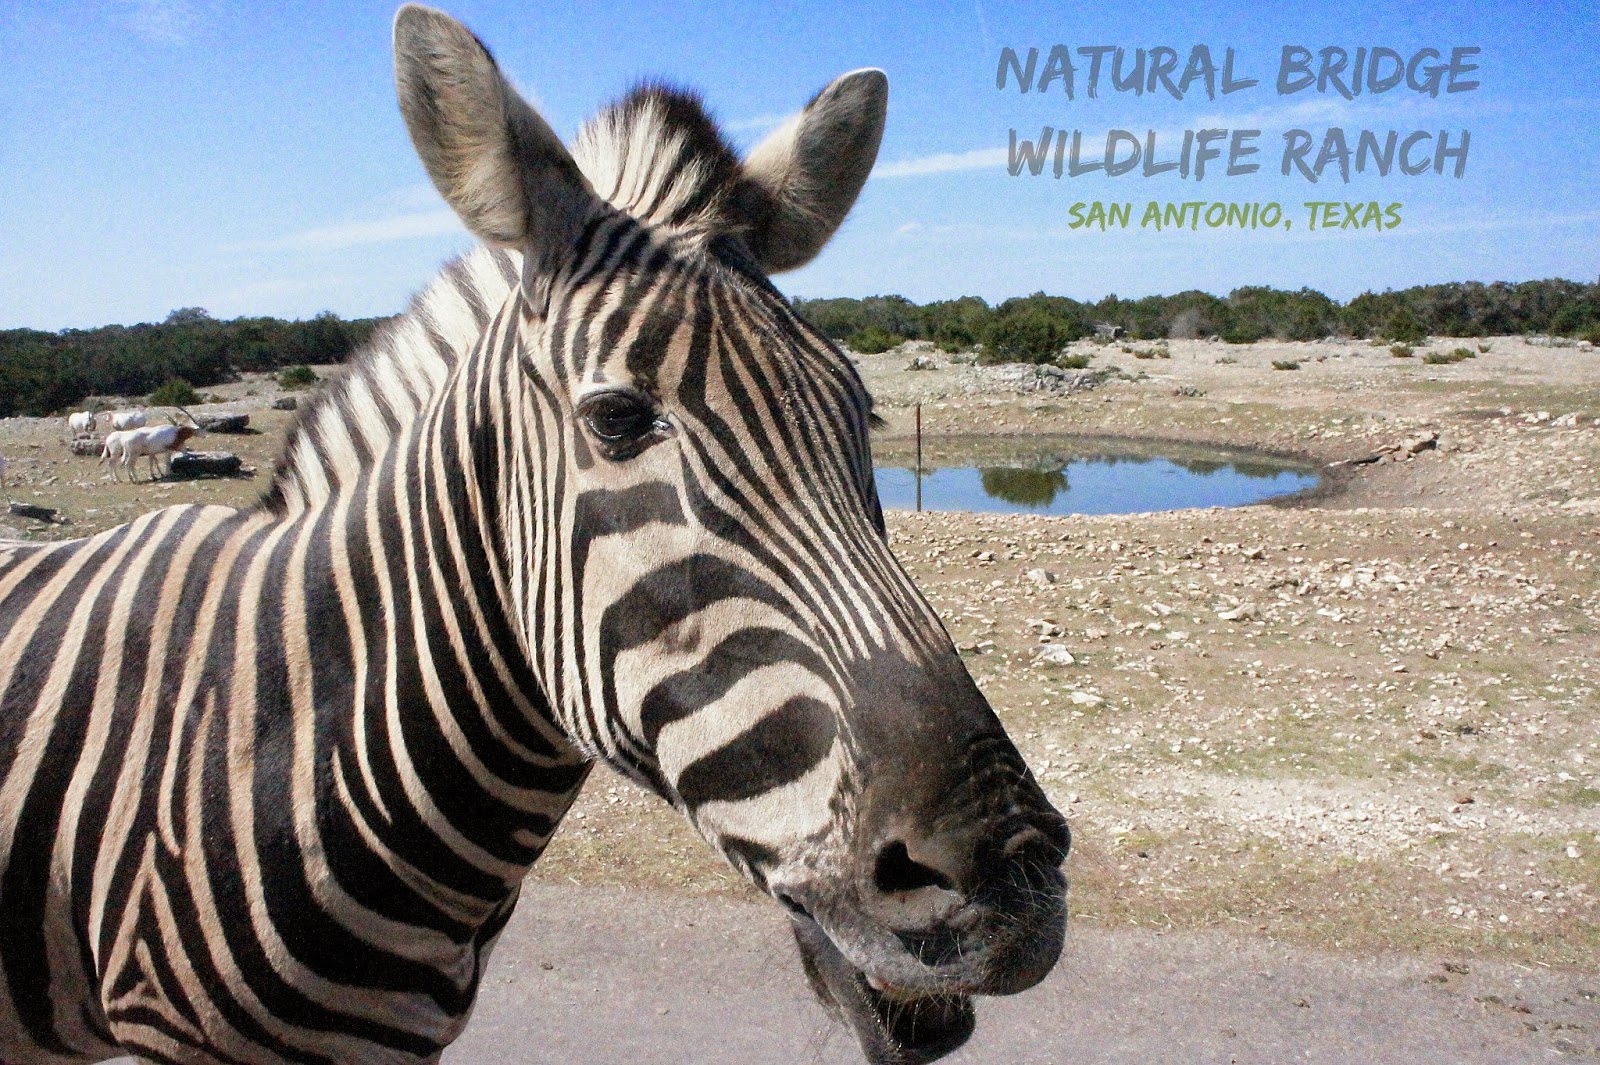 Zebras at the Natural Bridge Wildlife Ranch in San Antonio, Texas